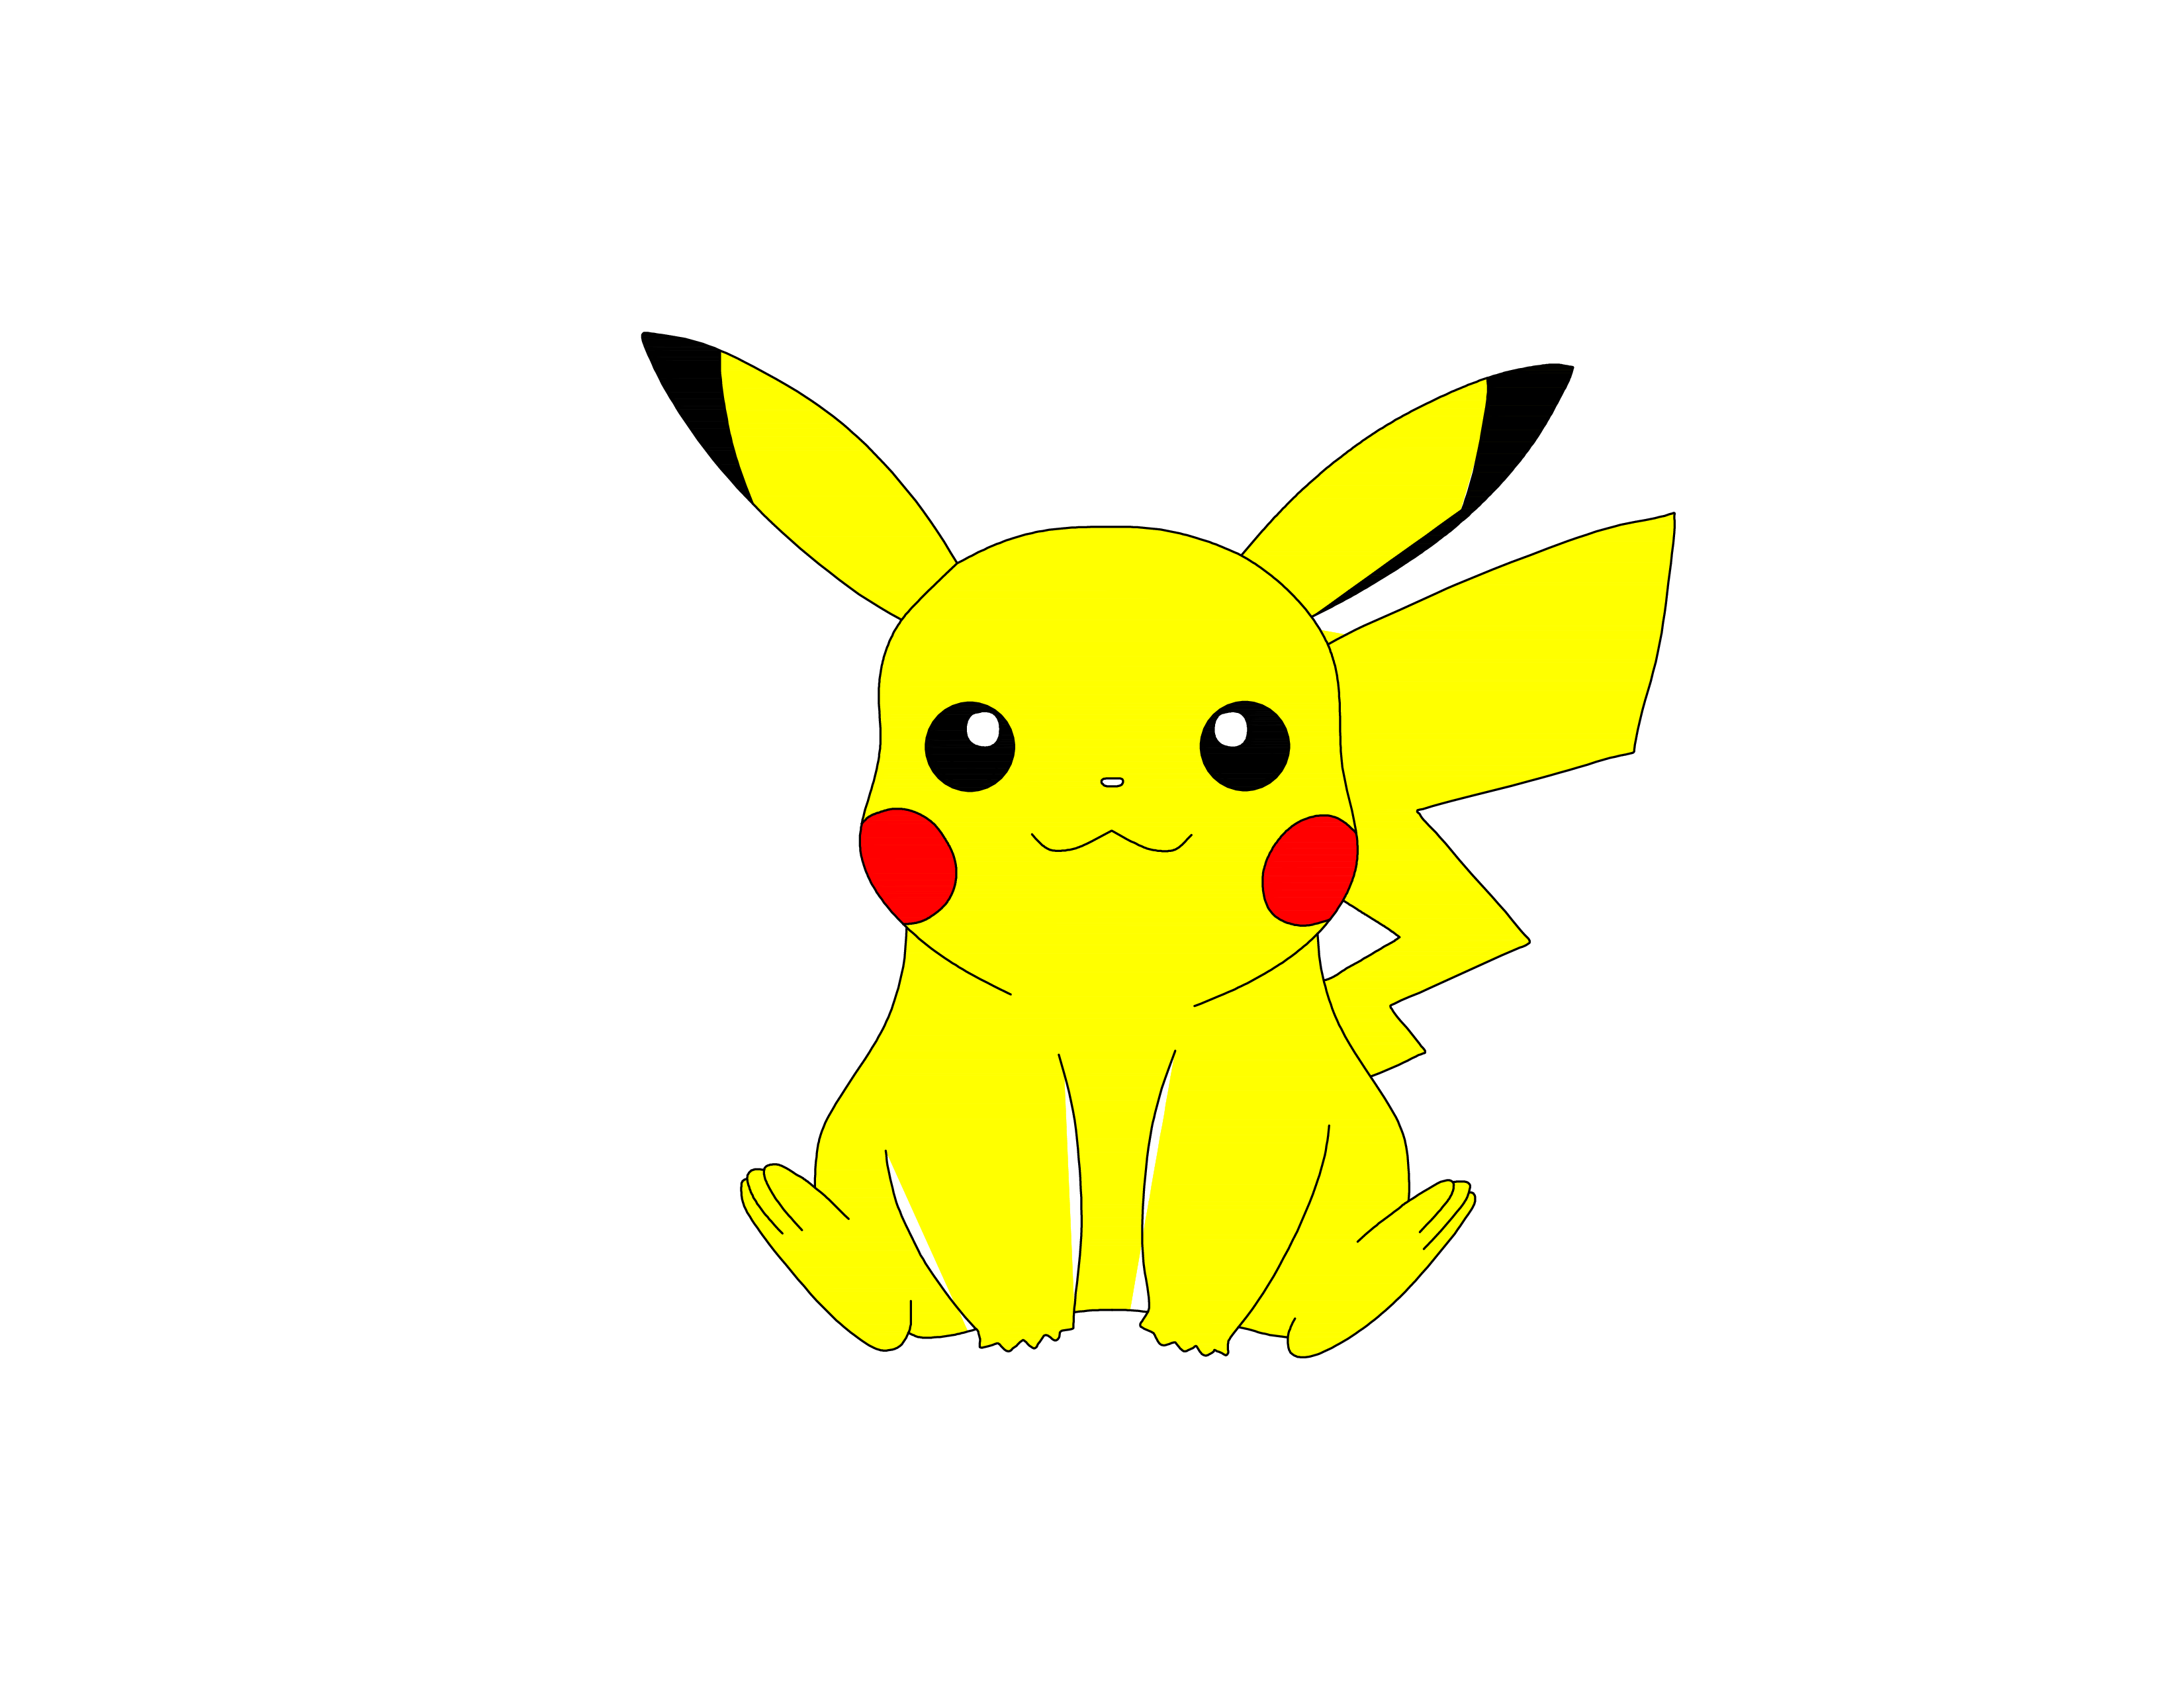 How to draw a Pokémon Pikachu kids cartoon drawing art for beginners kids  #creativ #kids #childrens - YouTube